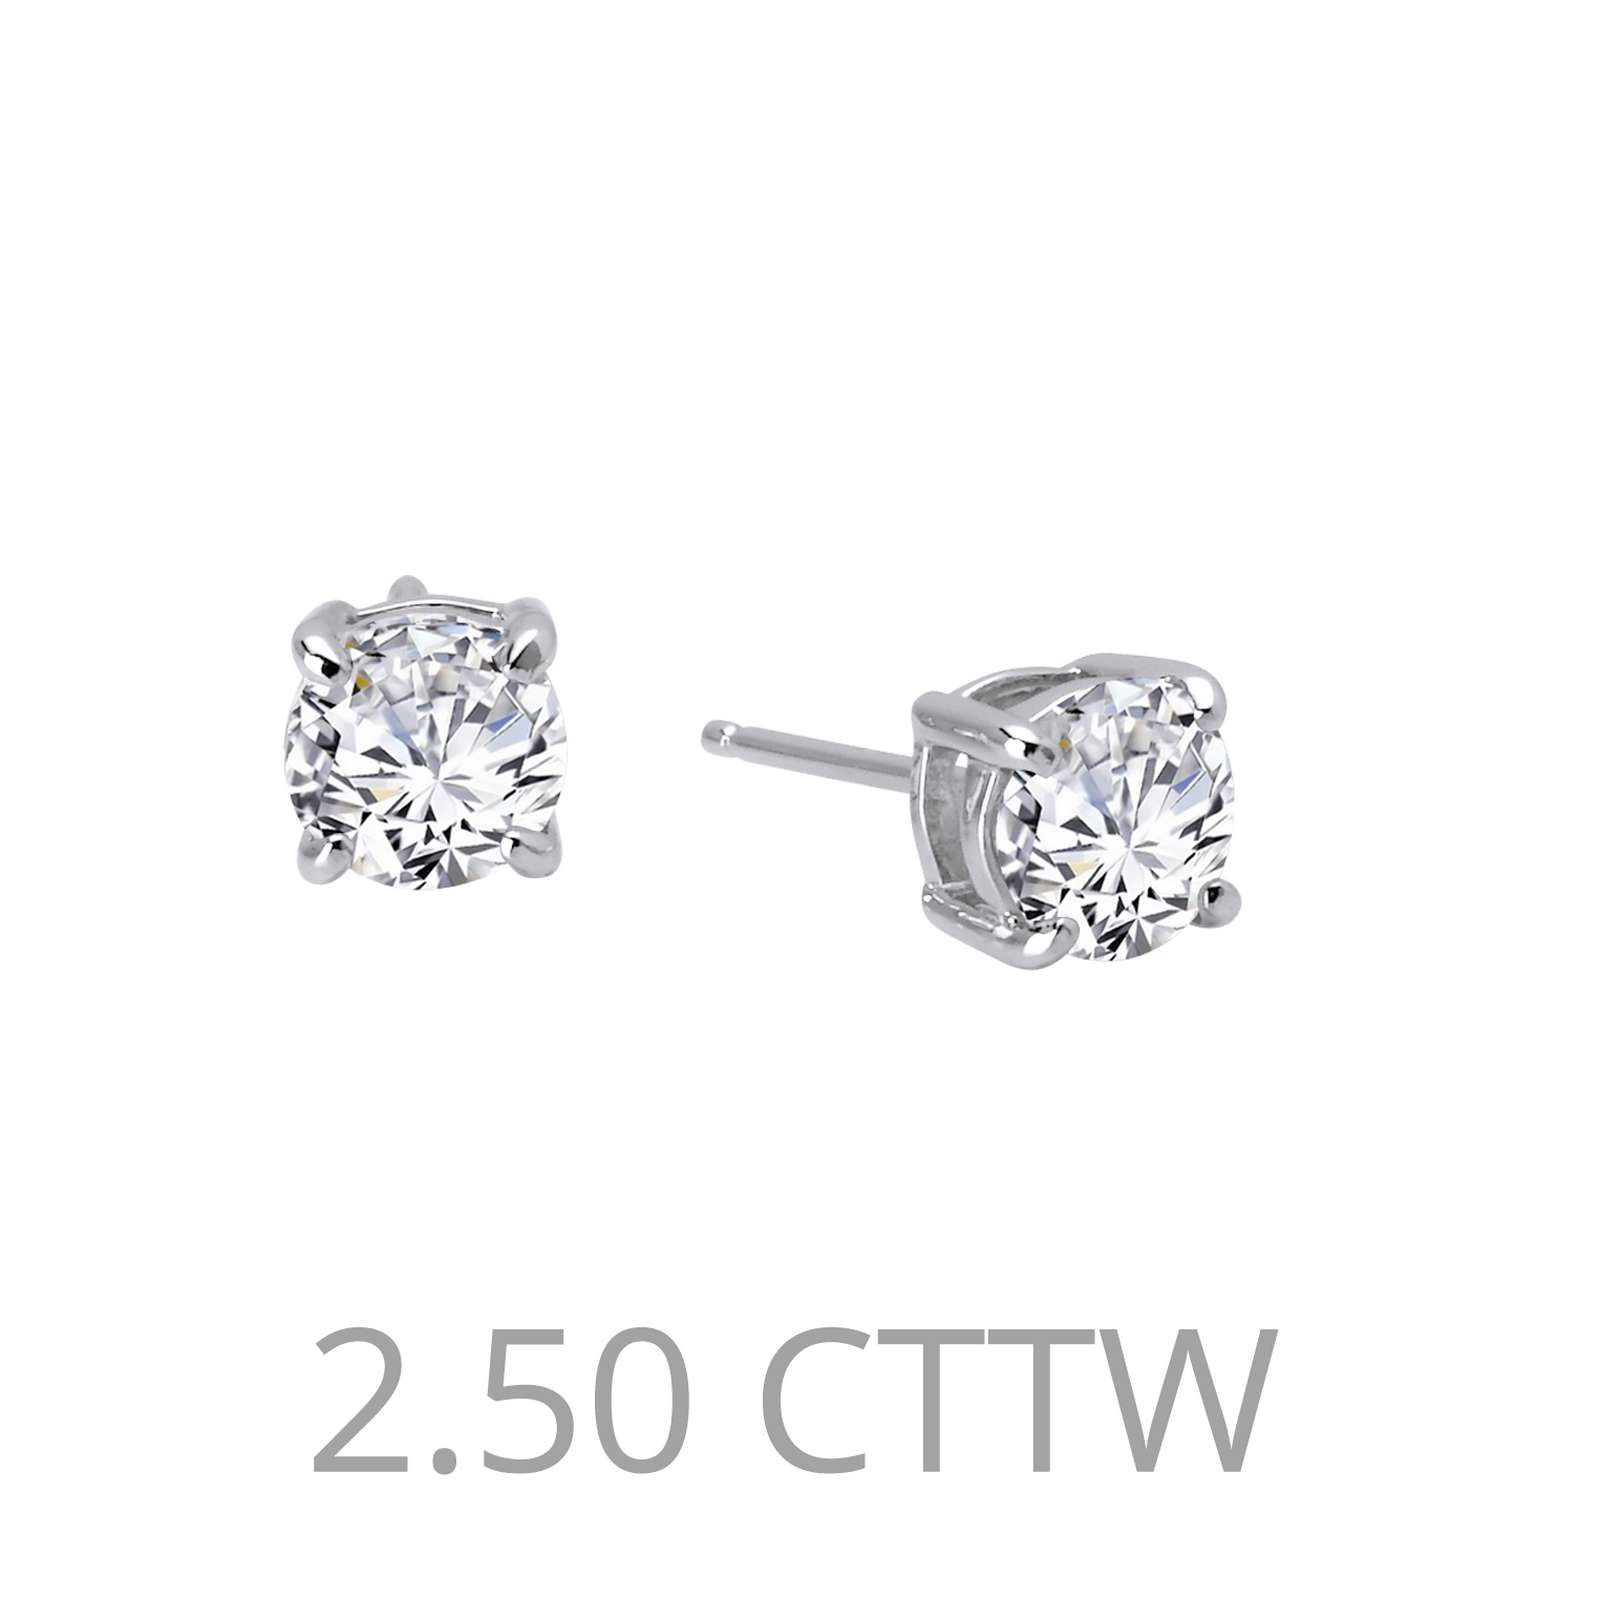 2.5 CTW Stud Earrings Griner Jewelry Co. Moultrie, GA